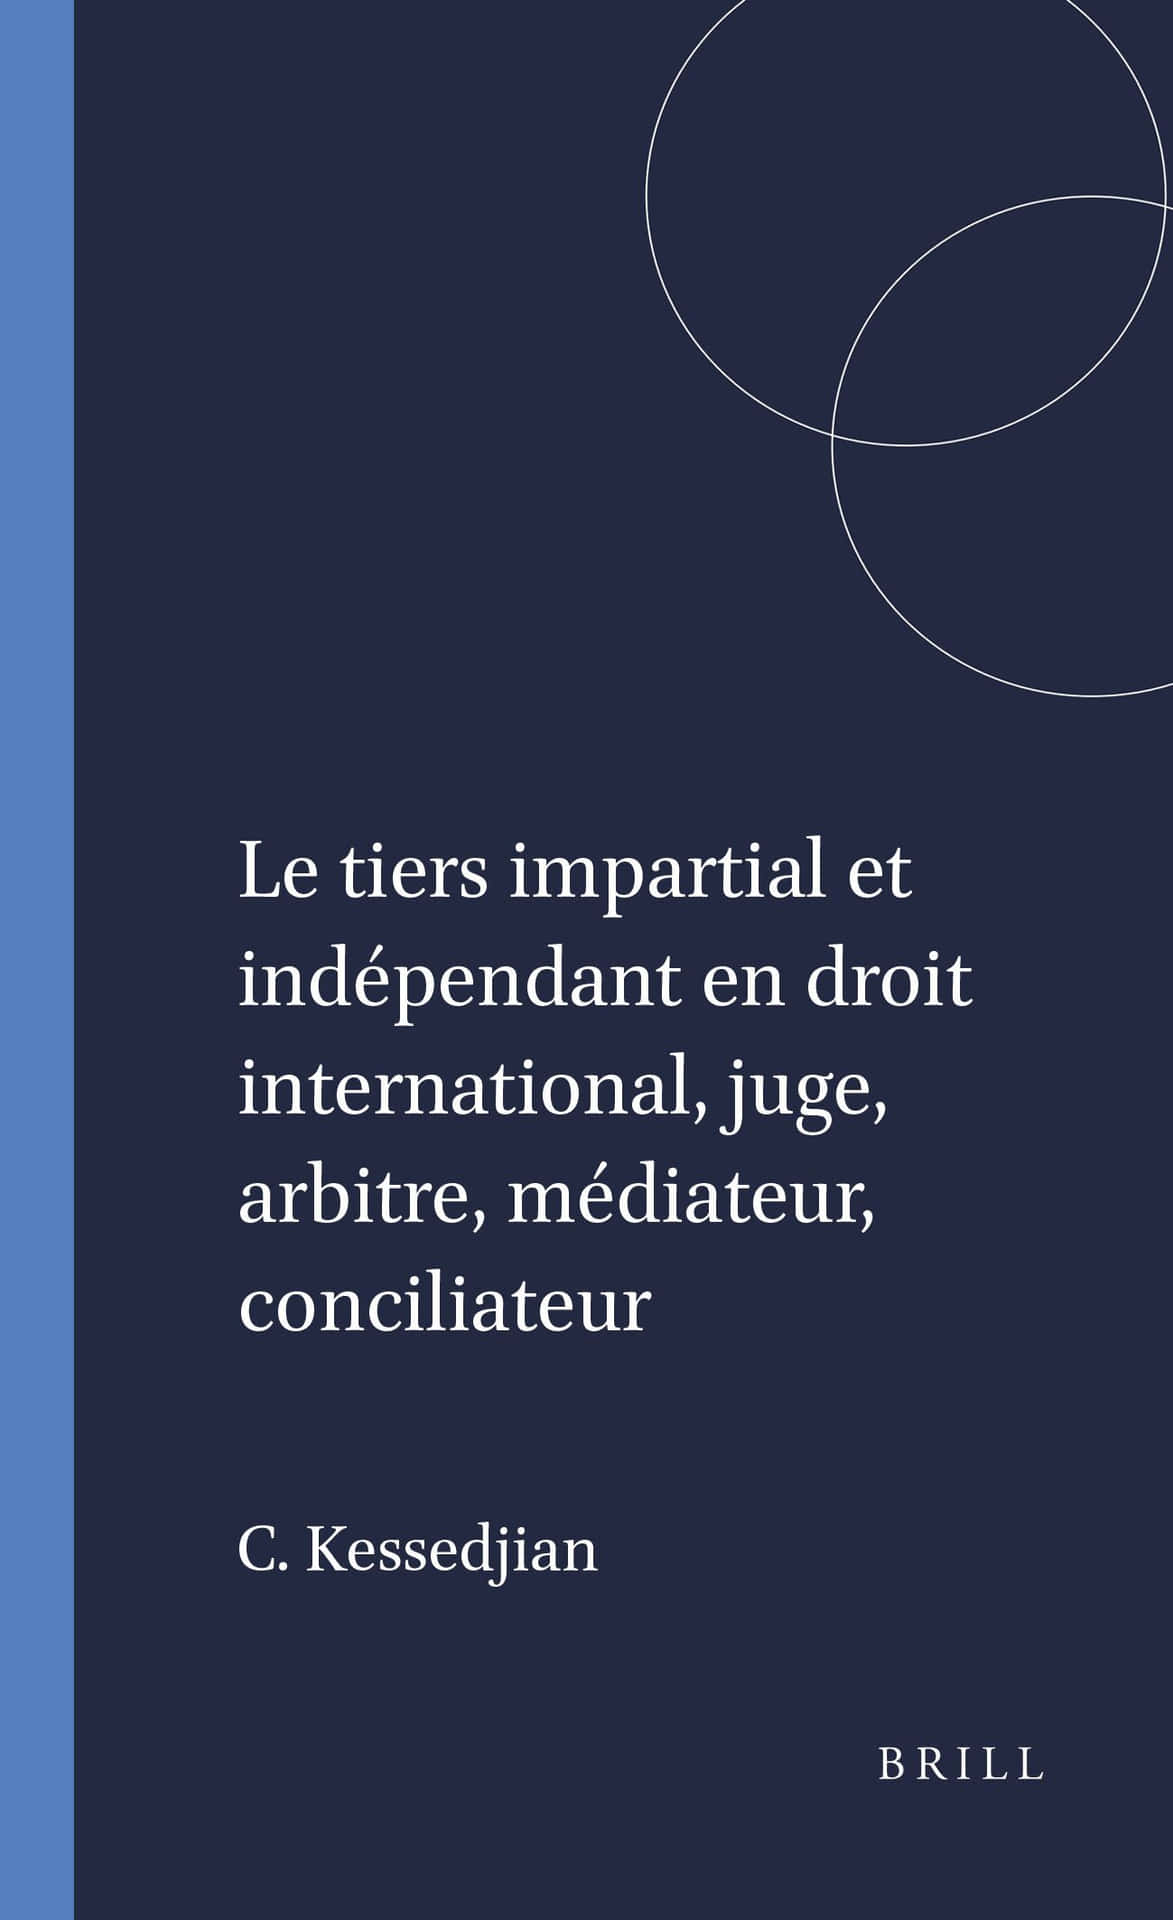 Impartial International Law - C. Kessedjian Wallpaper